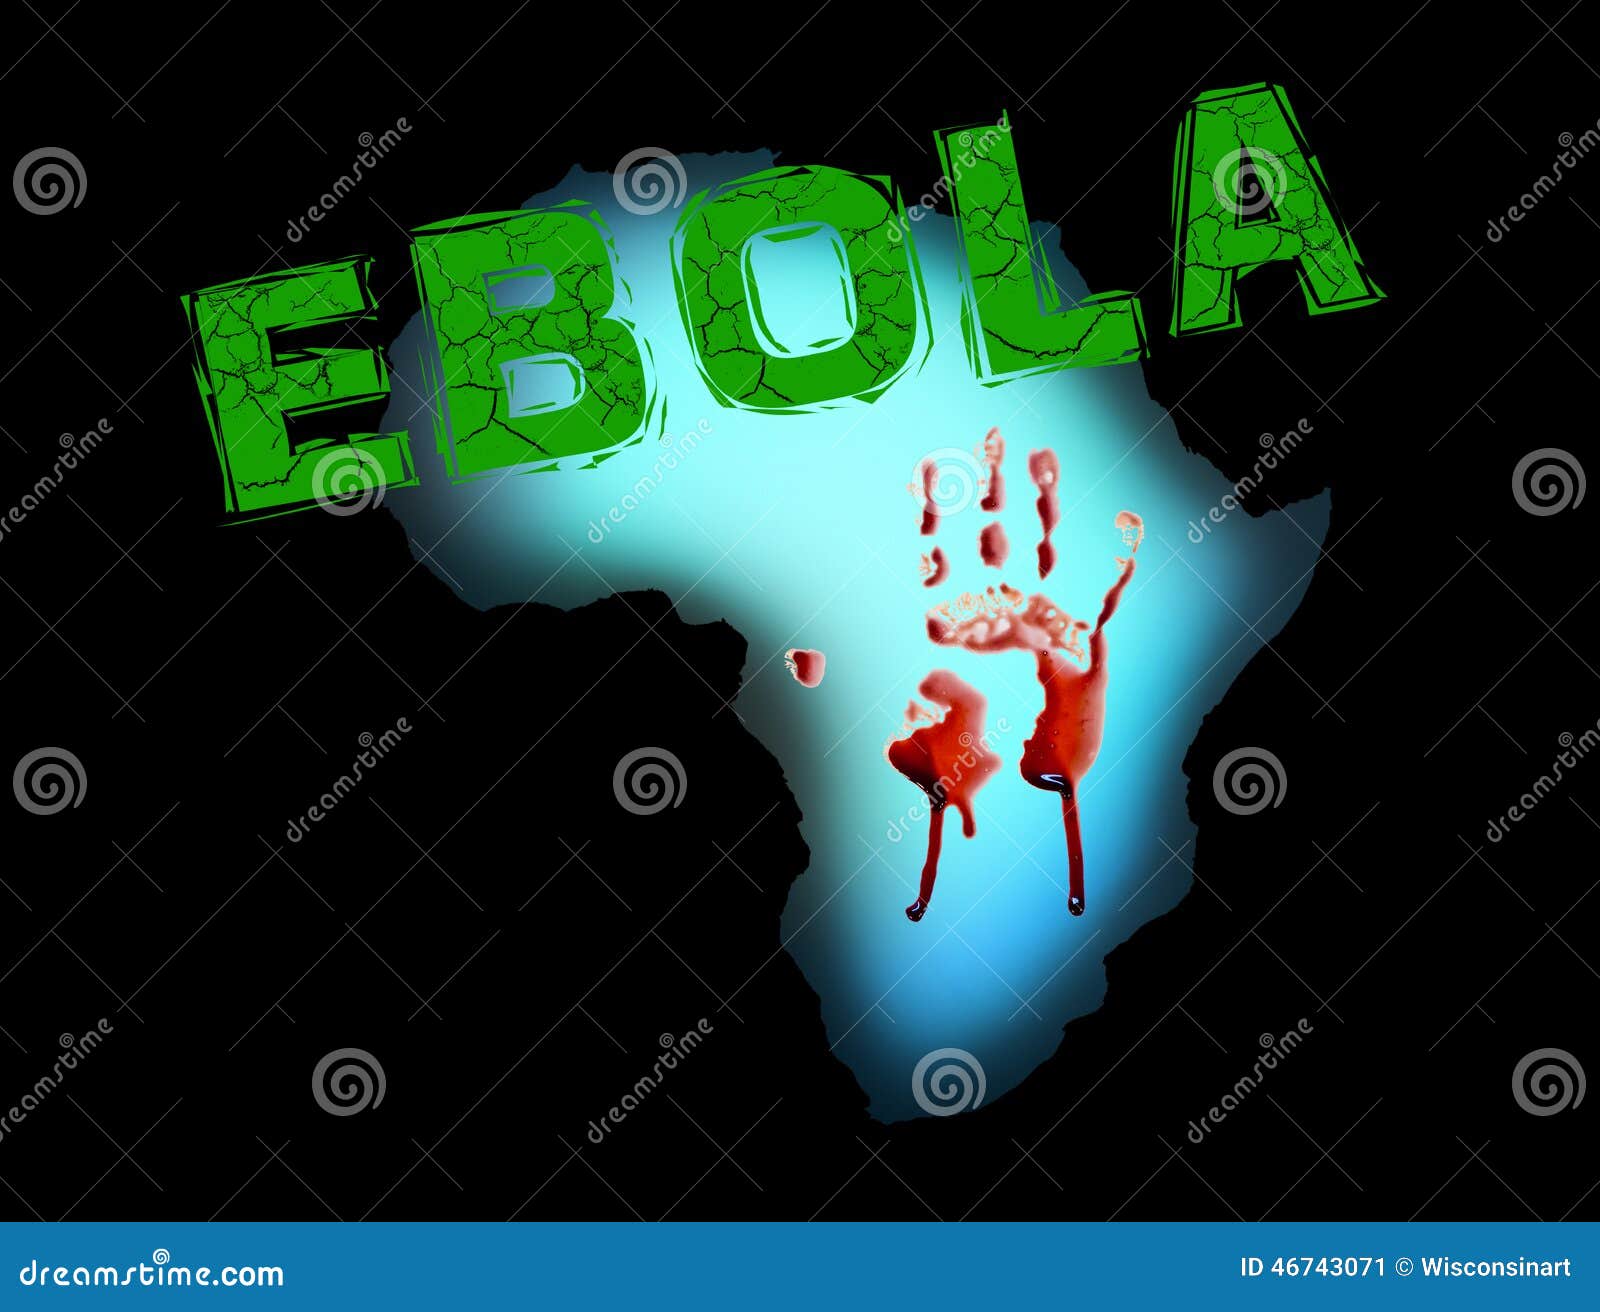 ebola virus africa pandemic disease